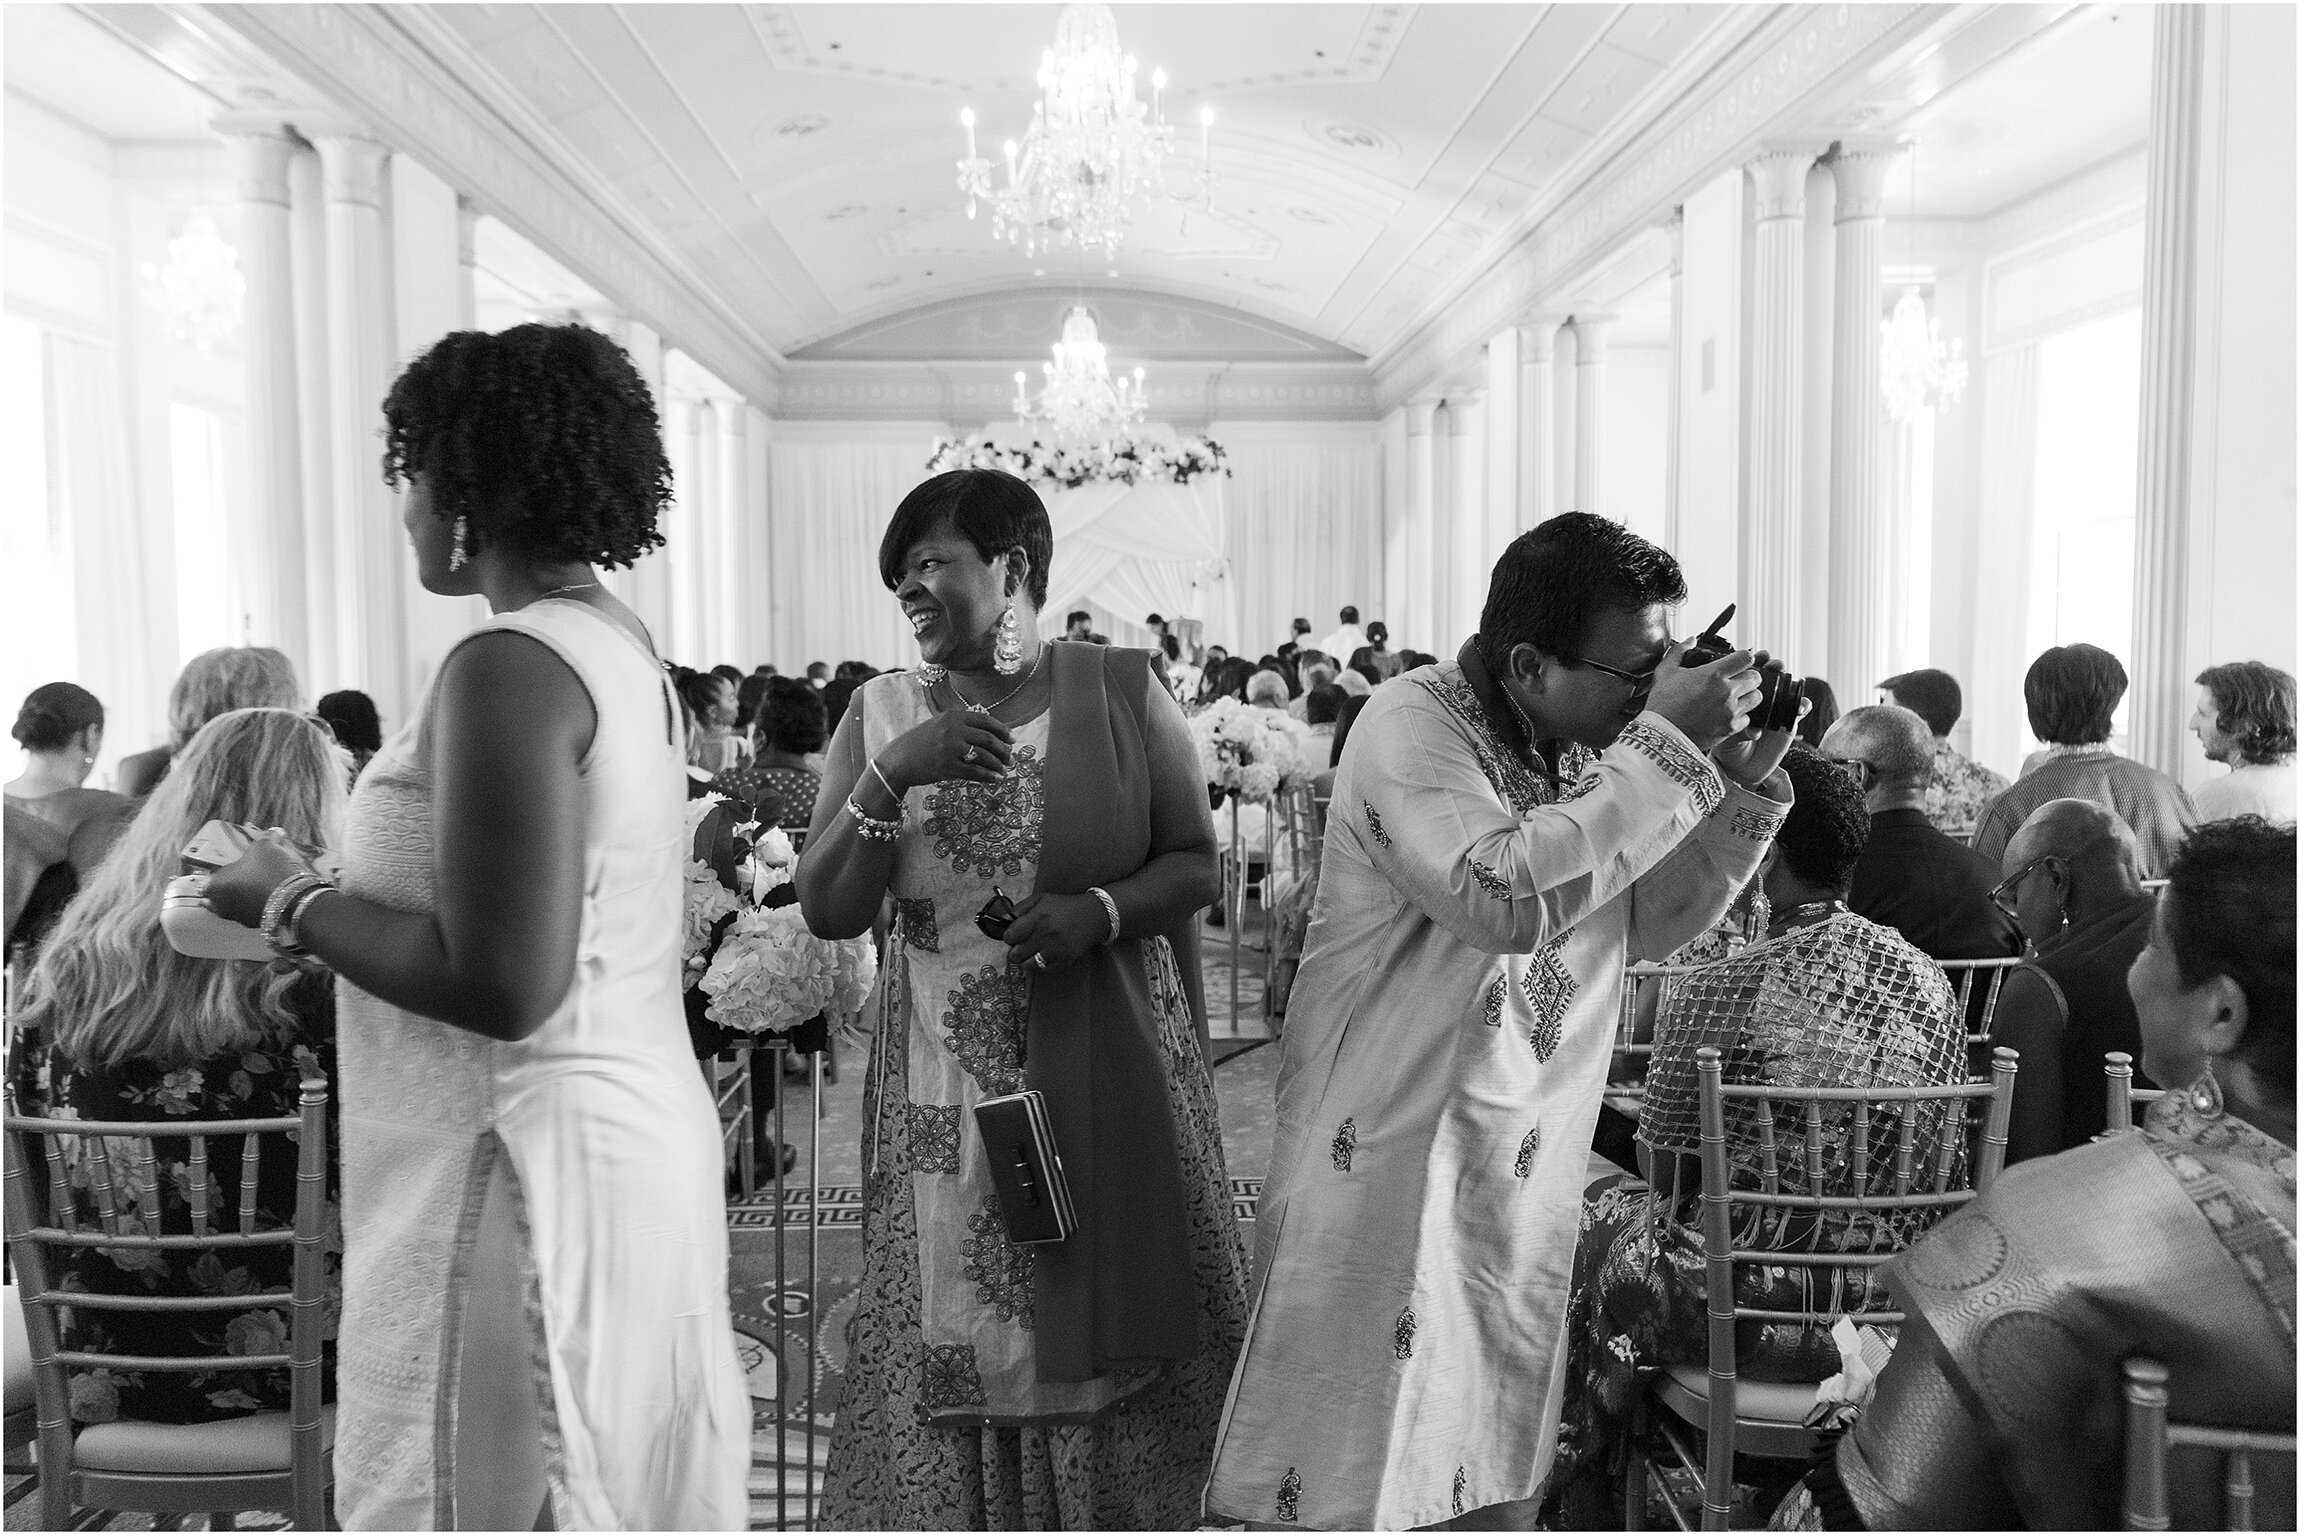 ©FianderFoto_Hindu Wedding_Bermuda_029.jpg